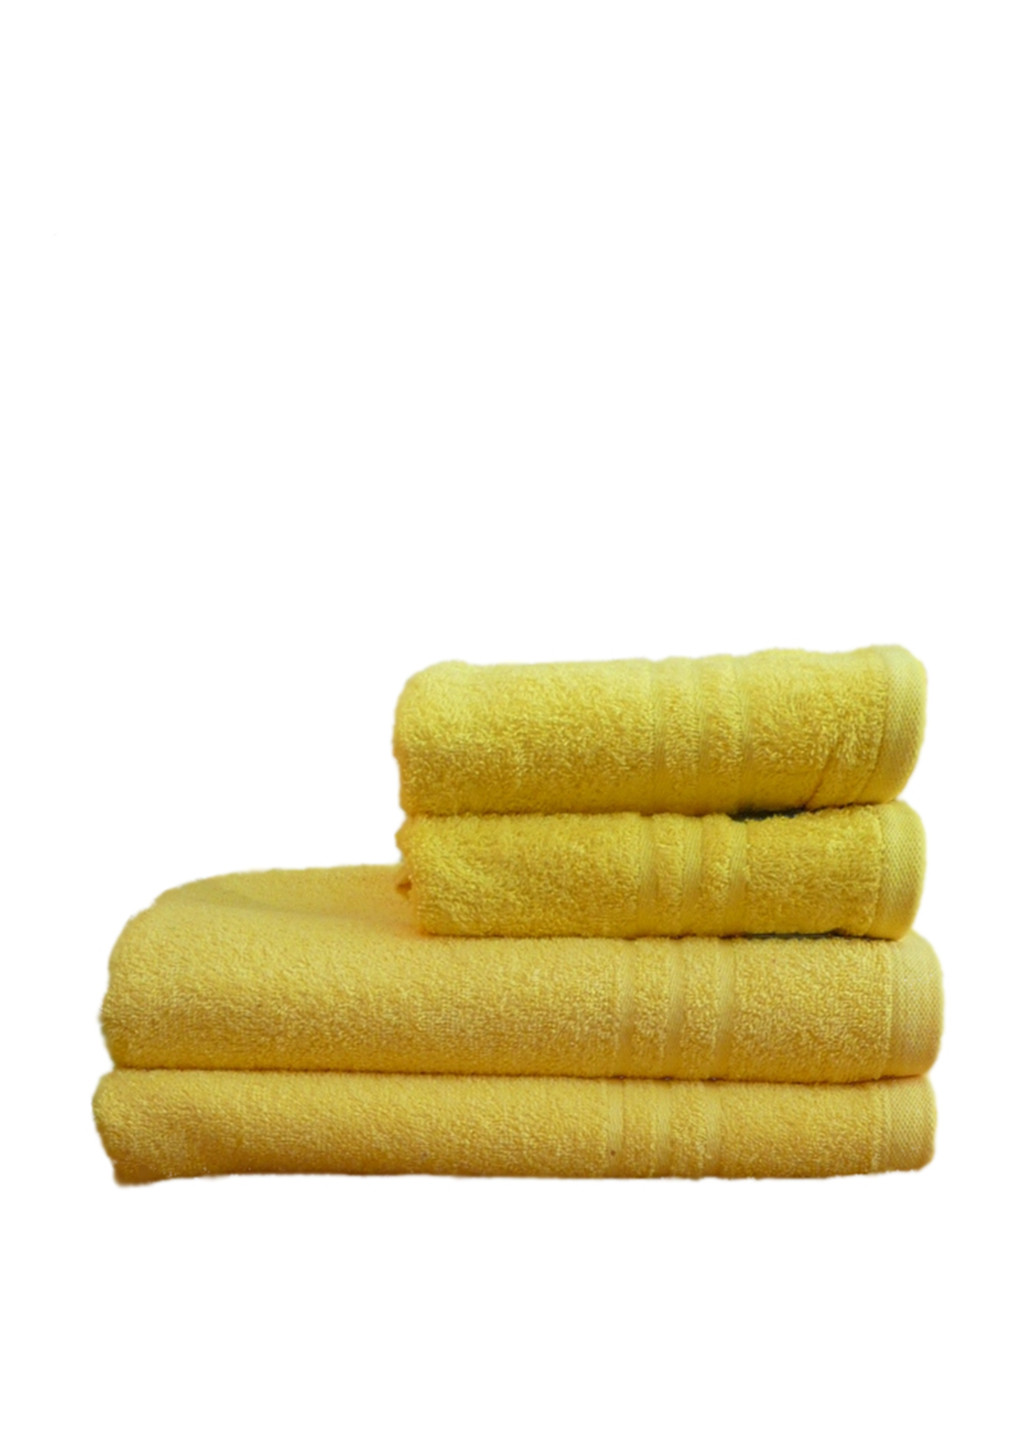 No Brand полотенце (1 шт), 70х130 см однотонный желтый производство - Пакистан